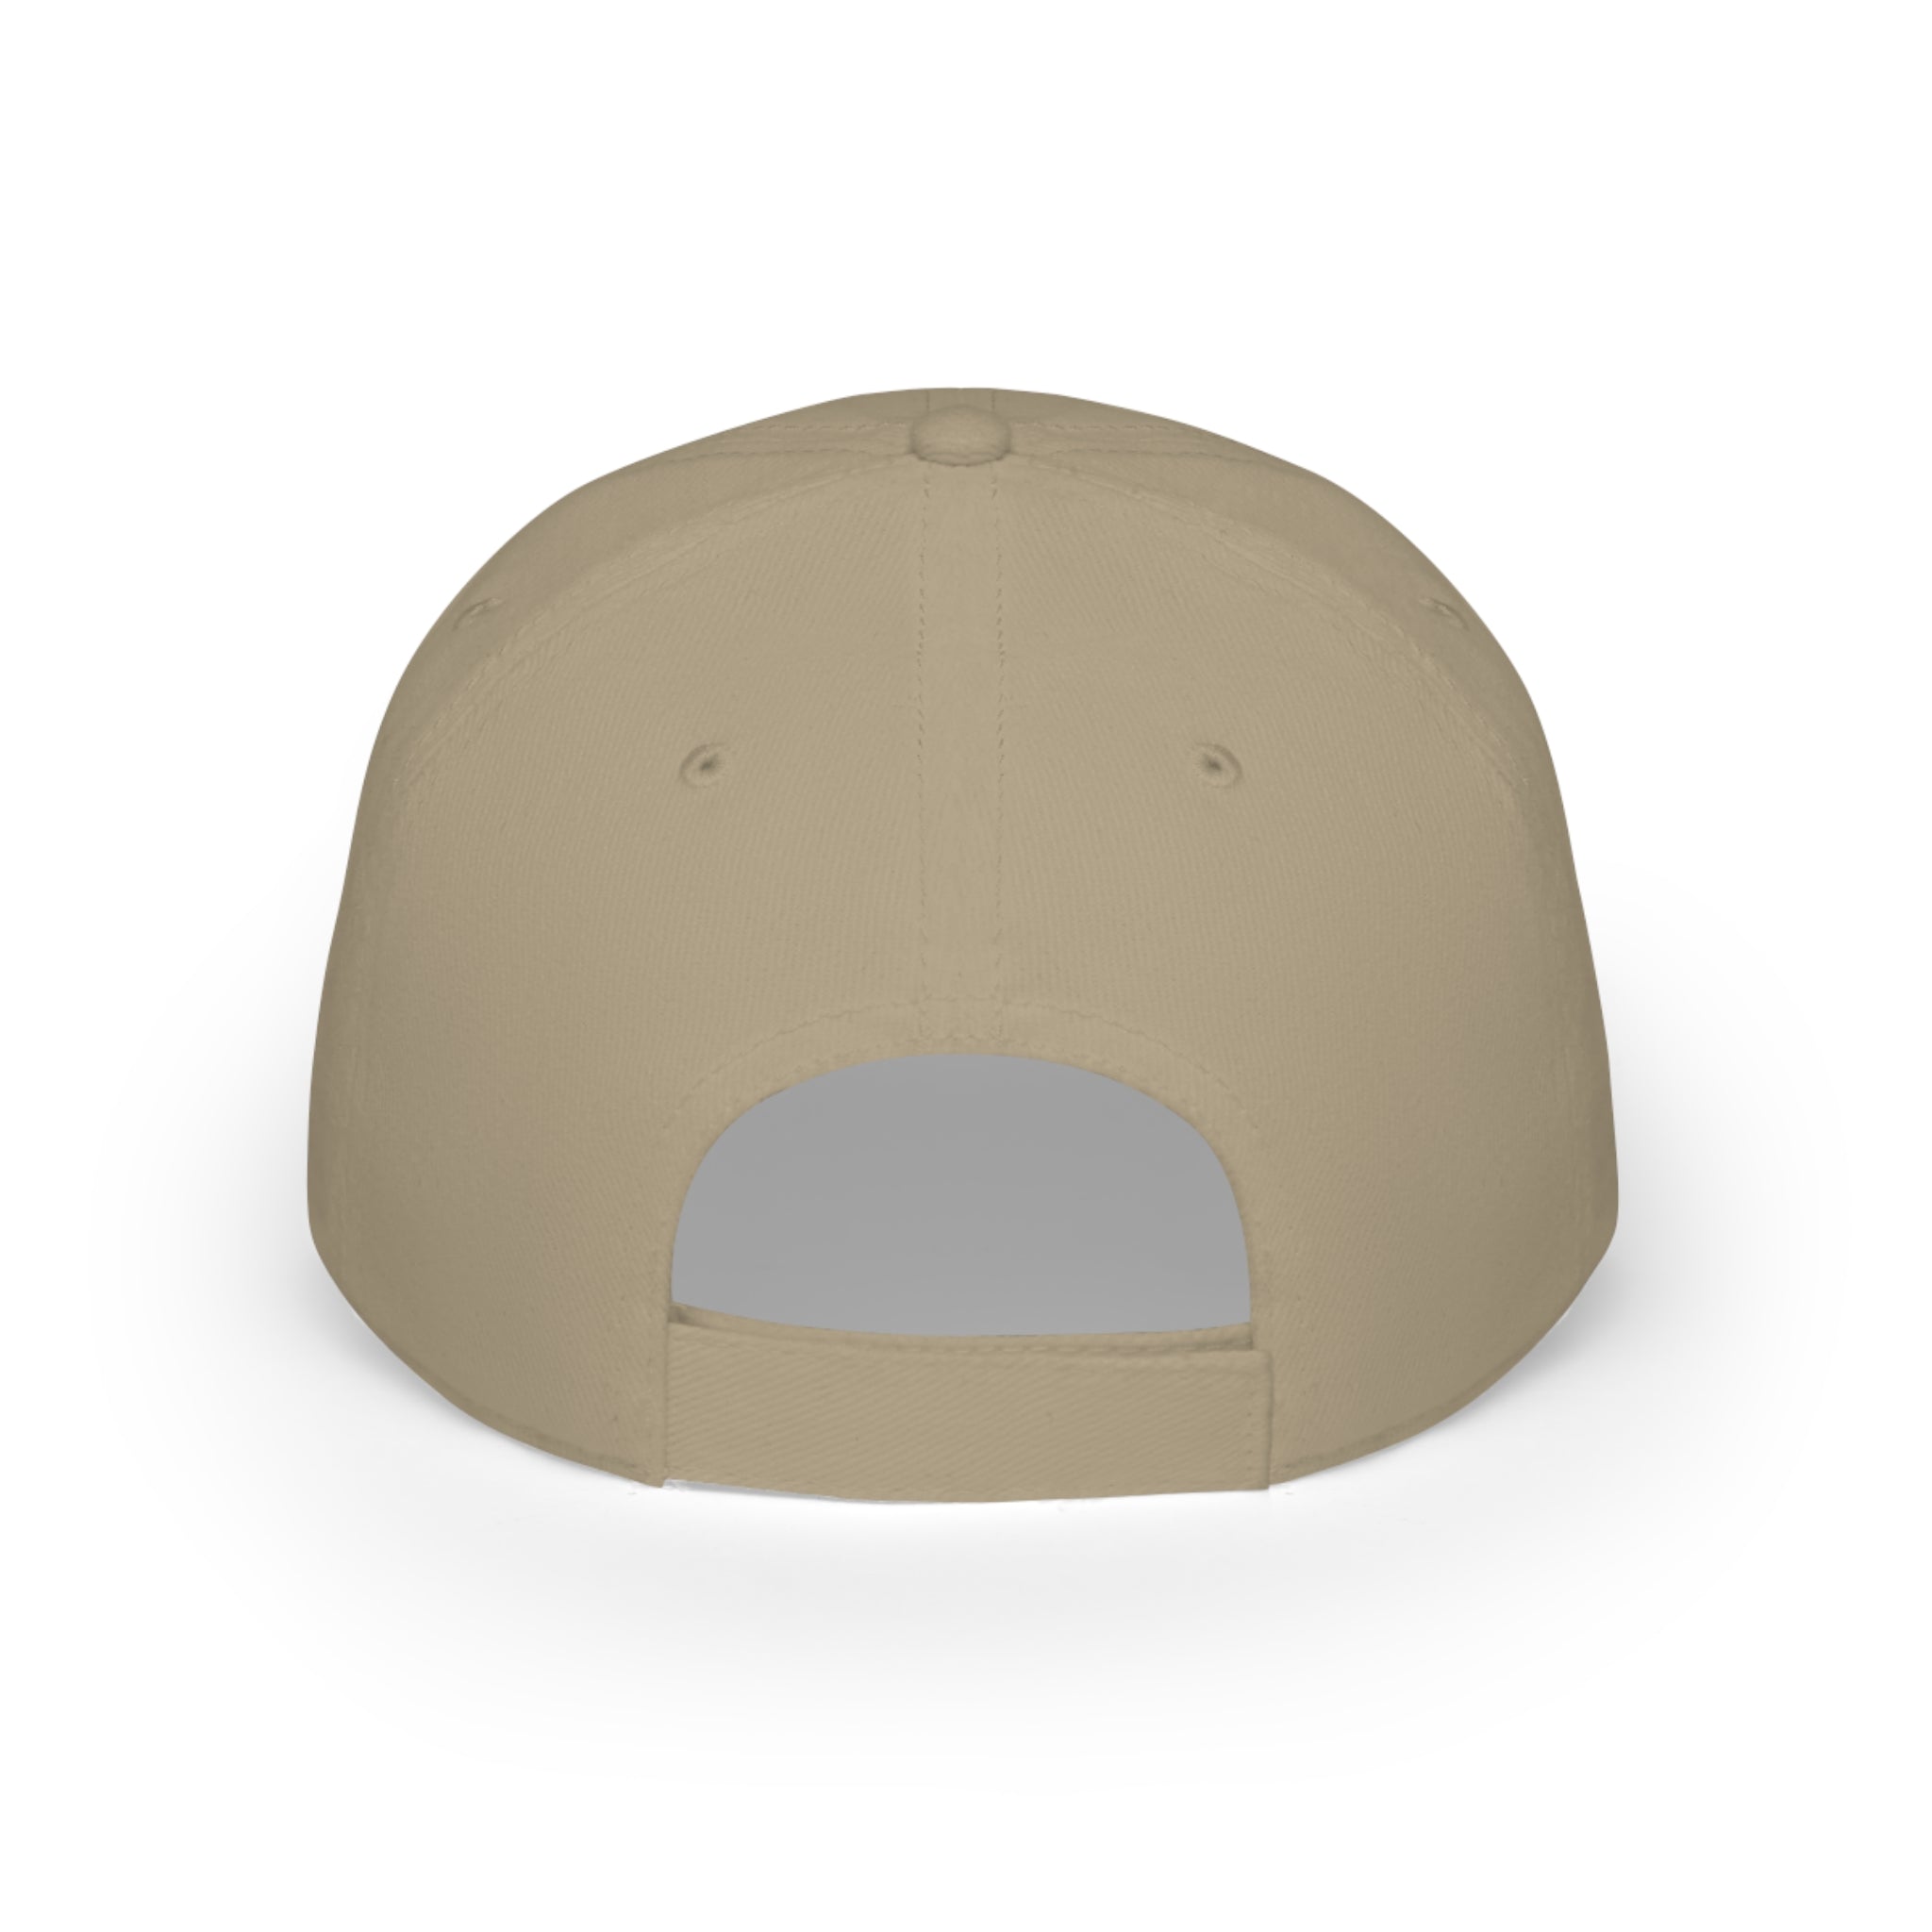 MogMog Planet Unisex Twill Hat (Cute ver.)